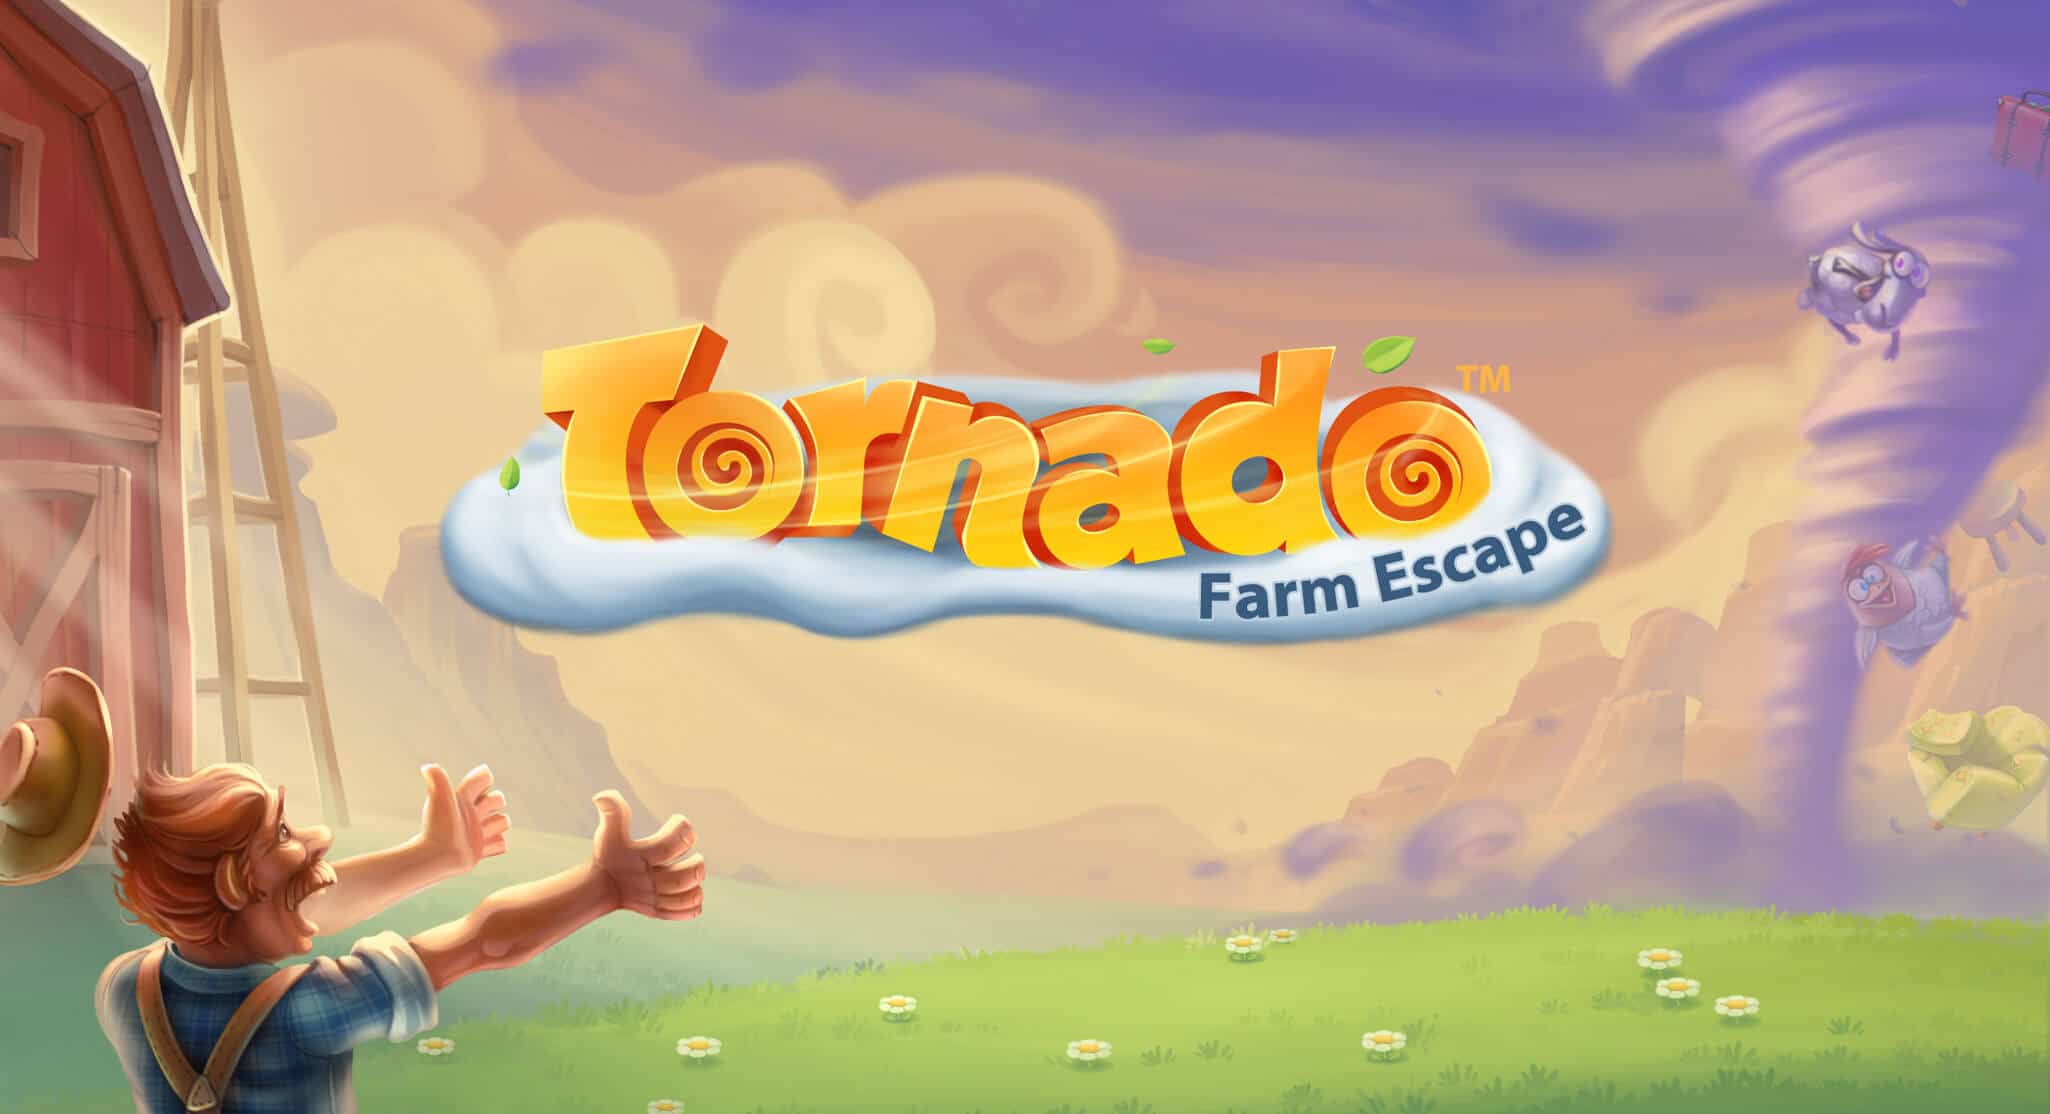 Tornado farm escape slot